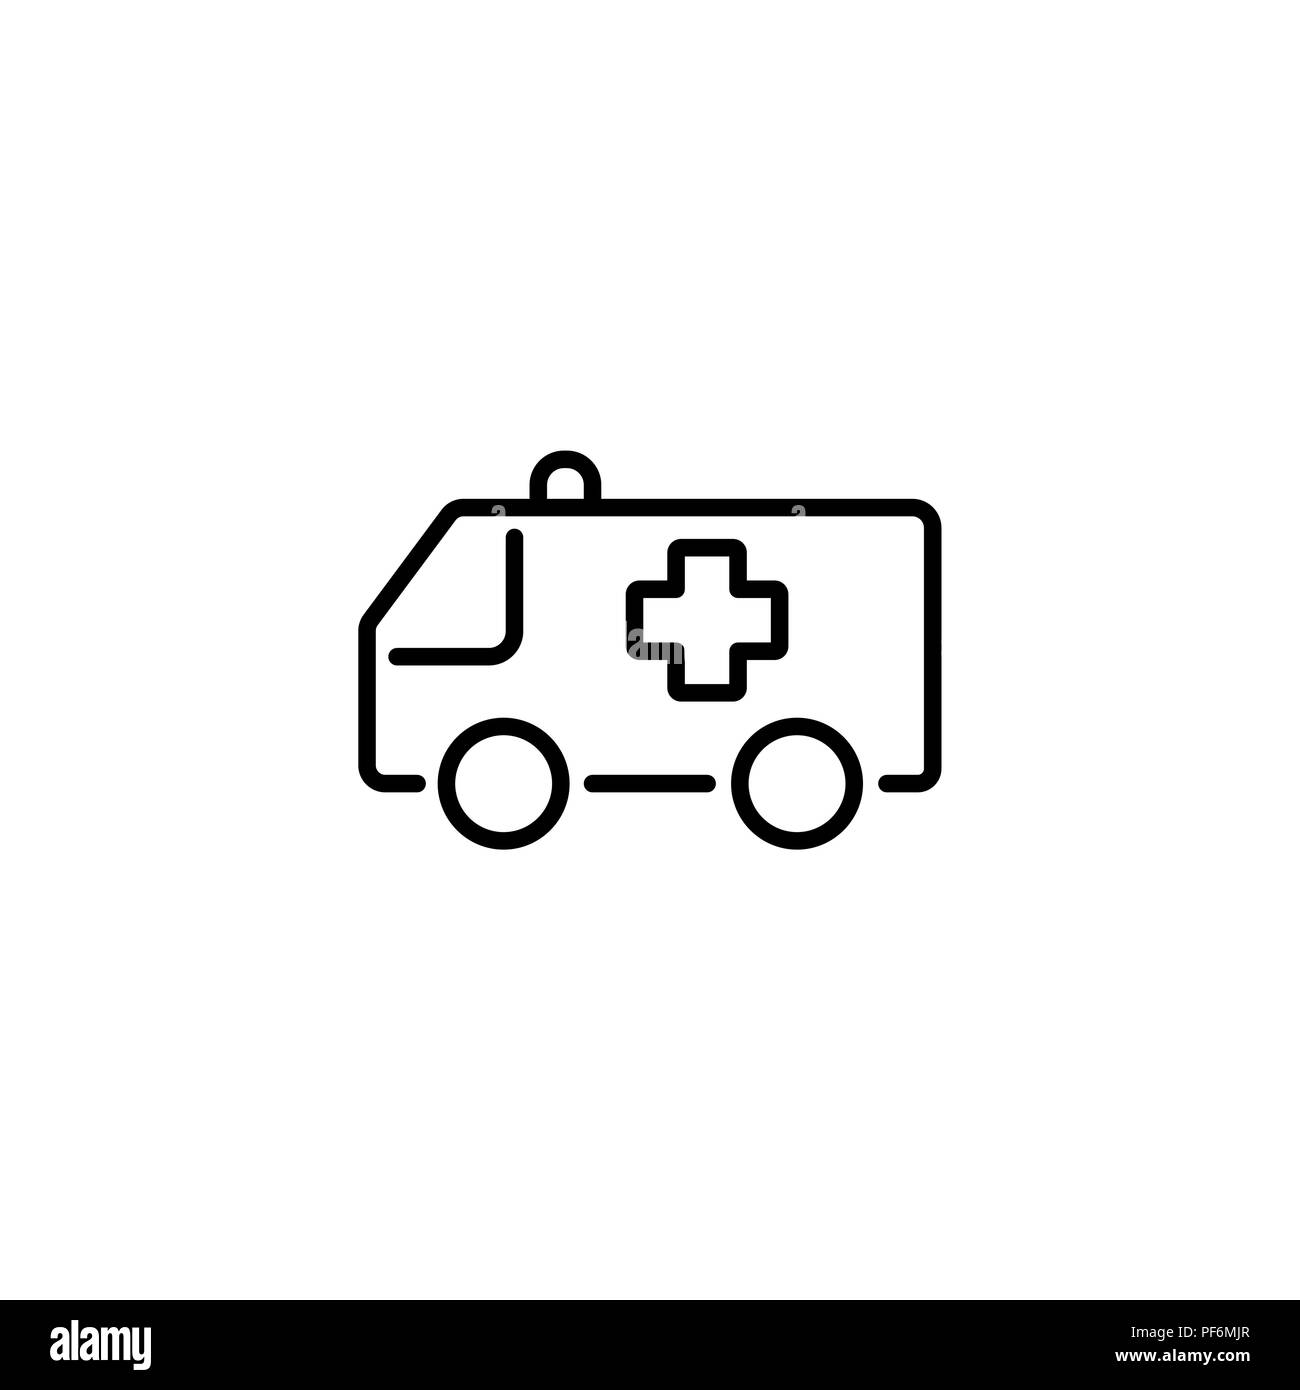 Web line icon. Ambulance black on white background Stock Vector